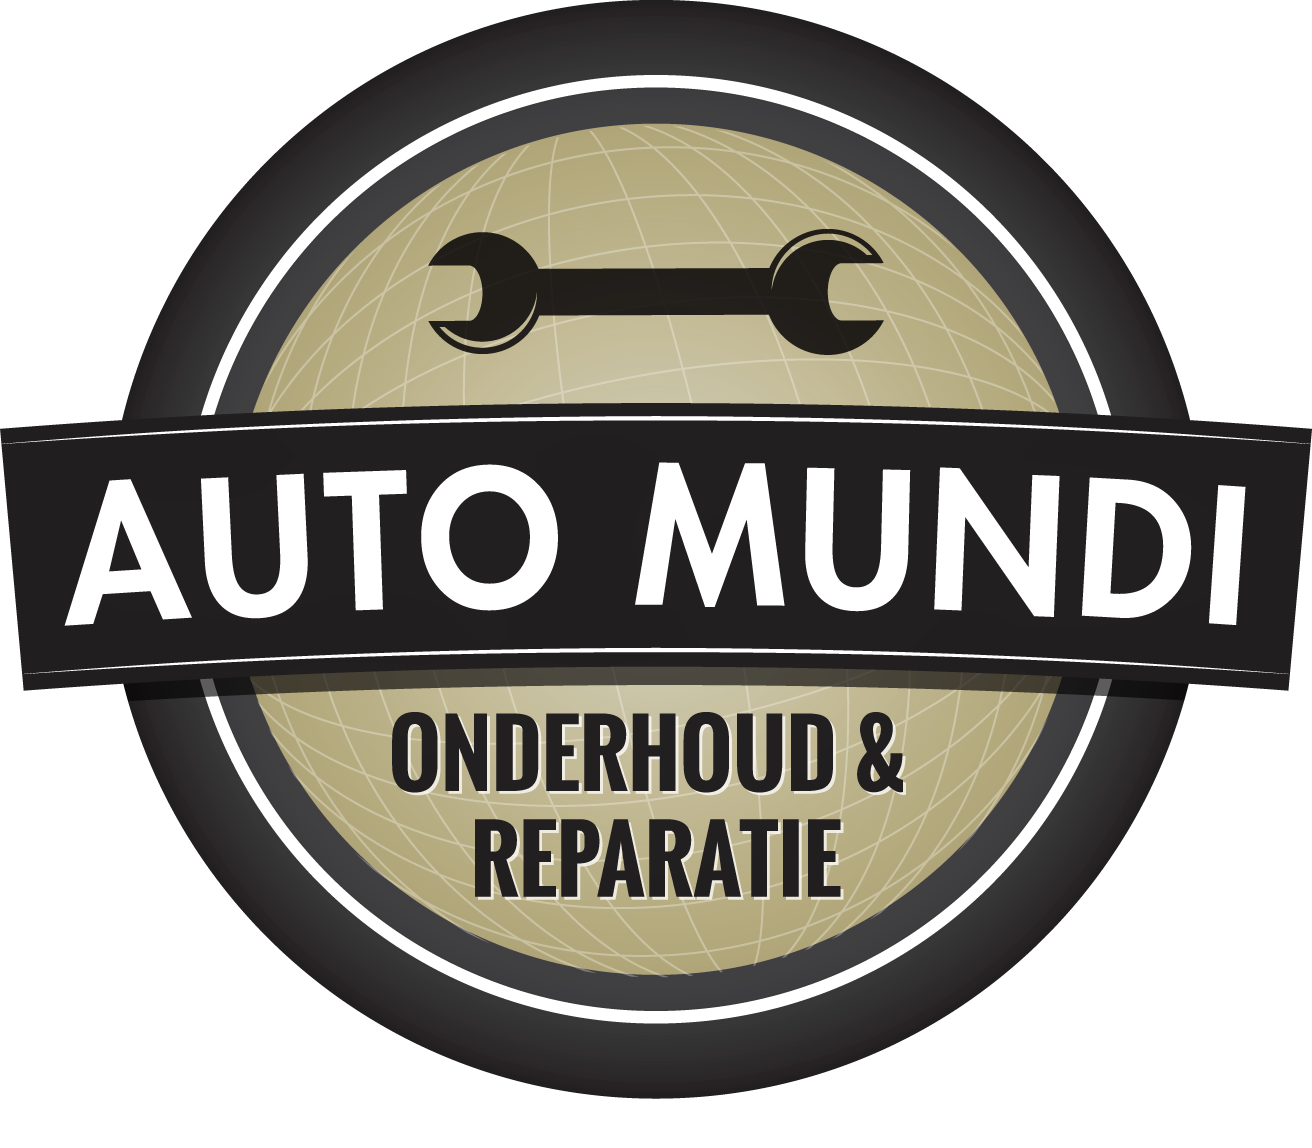 Auto Mundi logo